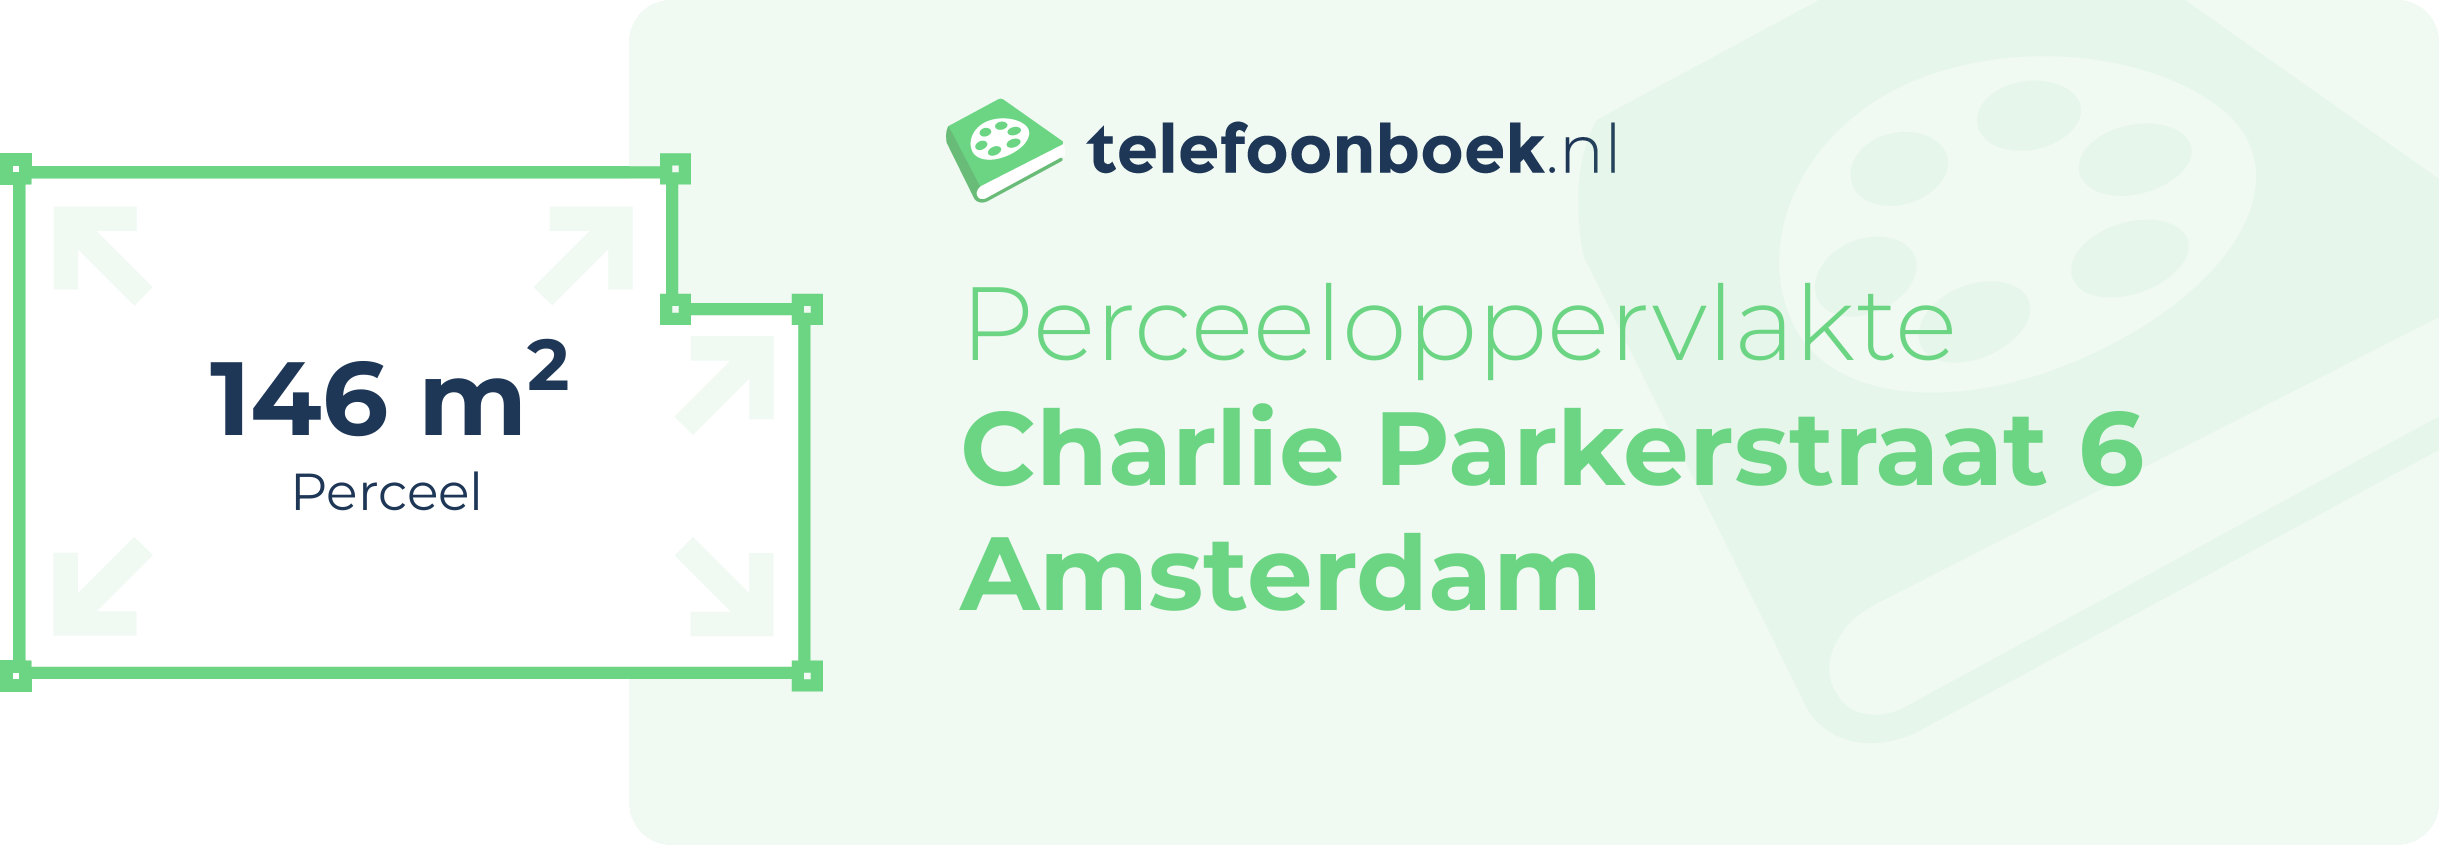 Perceeloppervlakte Charlie Parkerstraat 6 Amsterdam